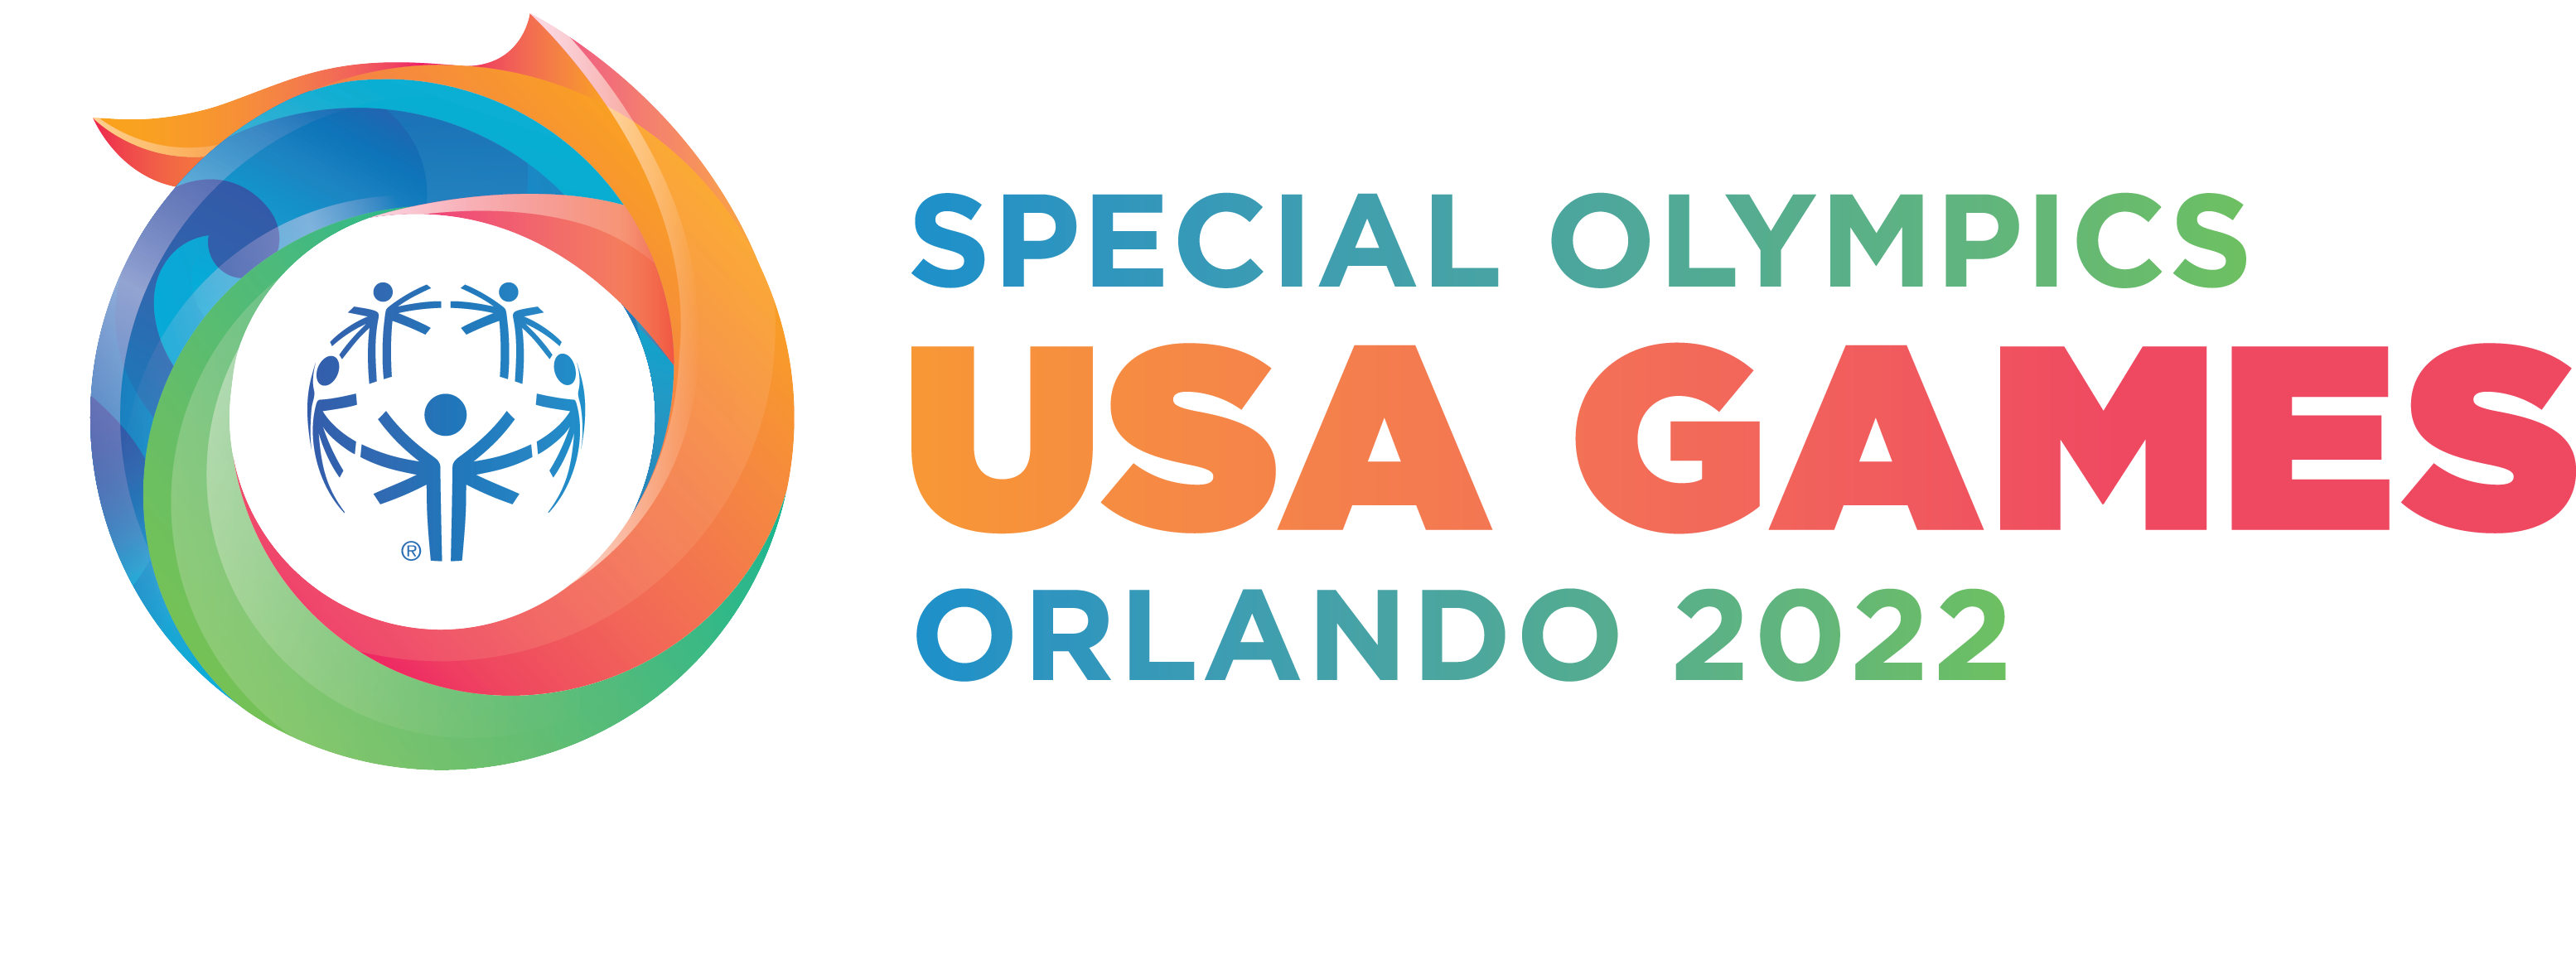 Special Olympics Washington2022 Special Olympics USA Games Special